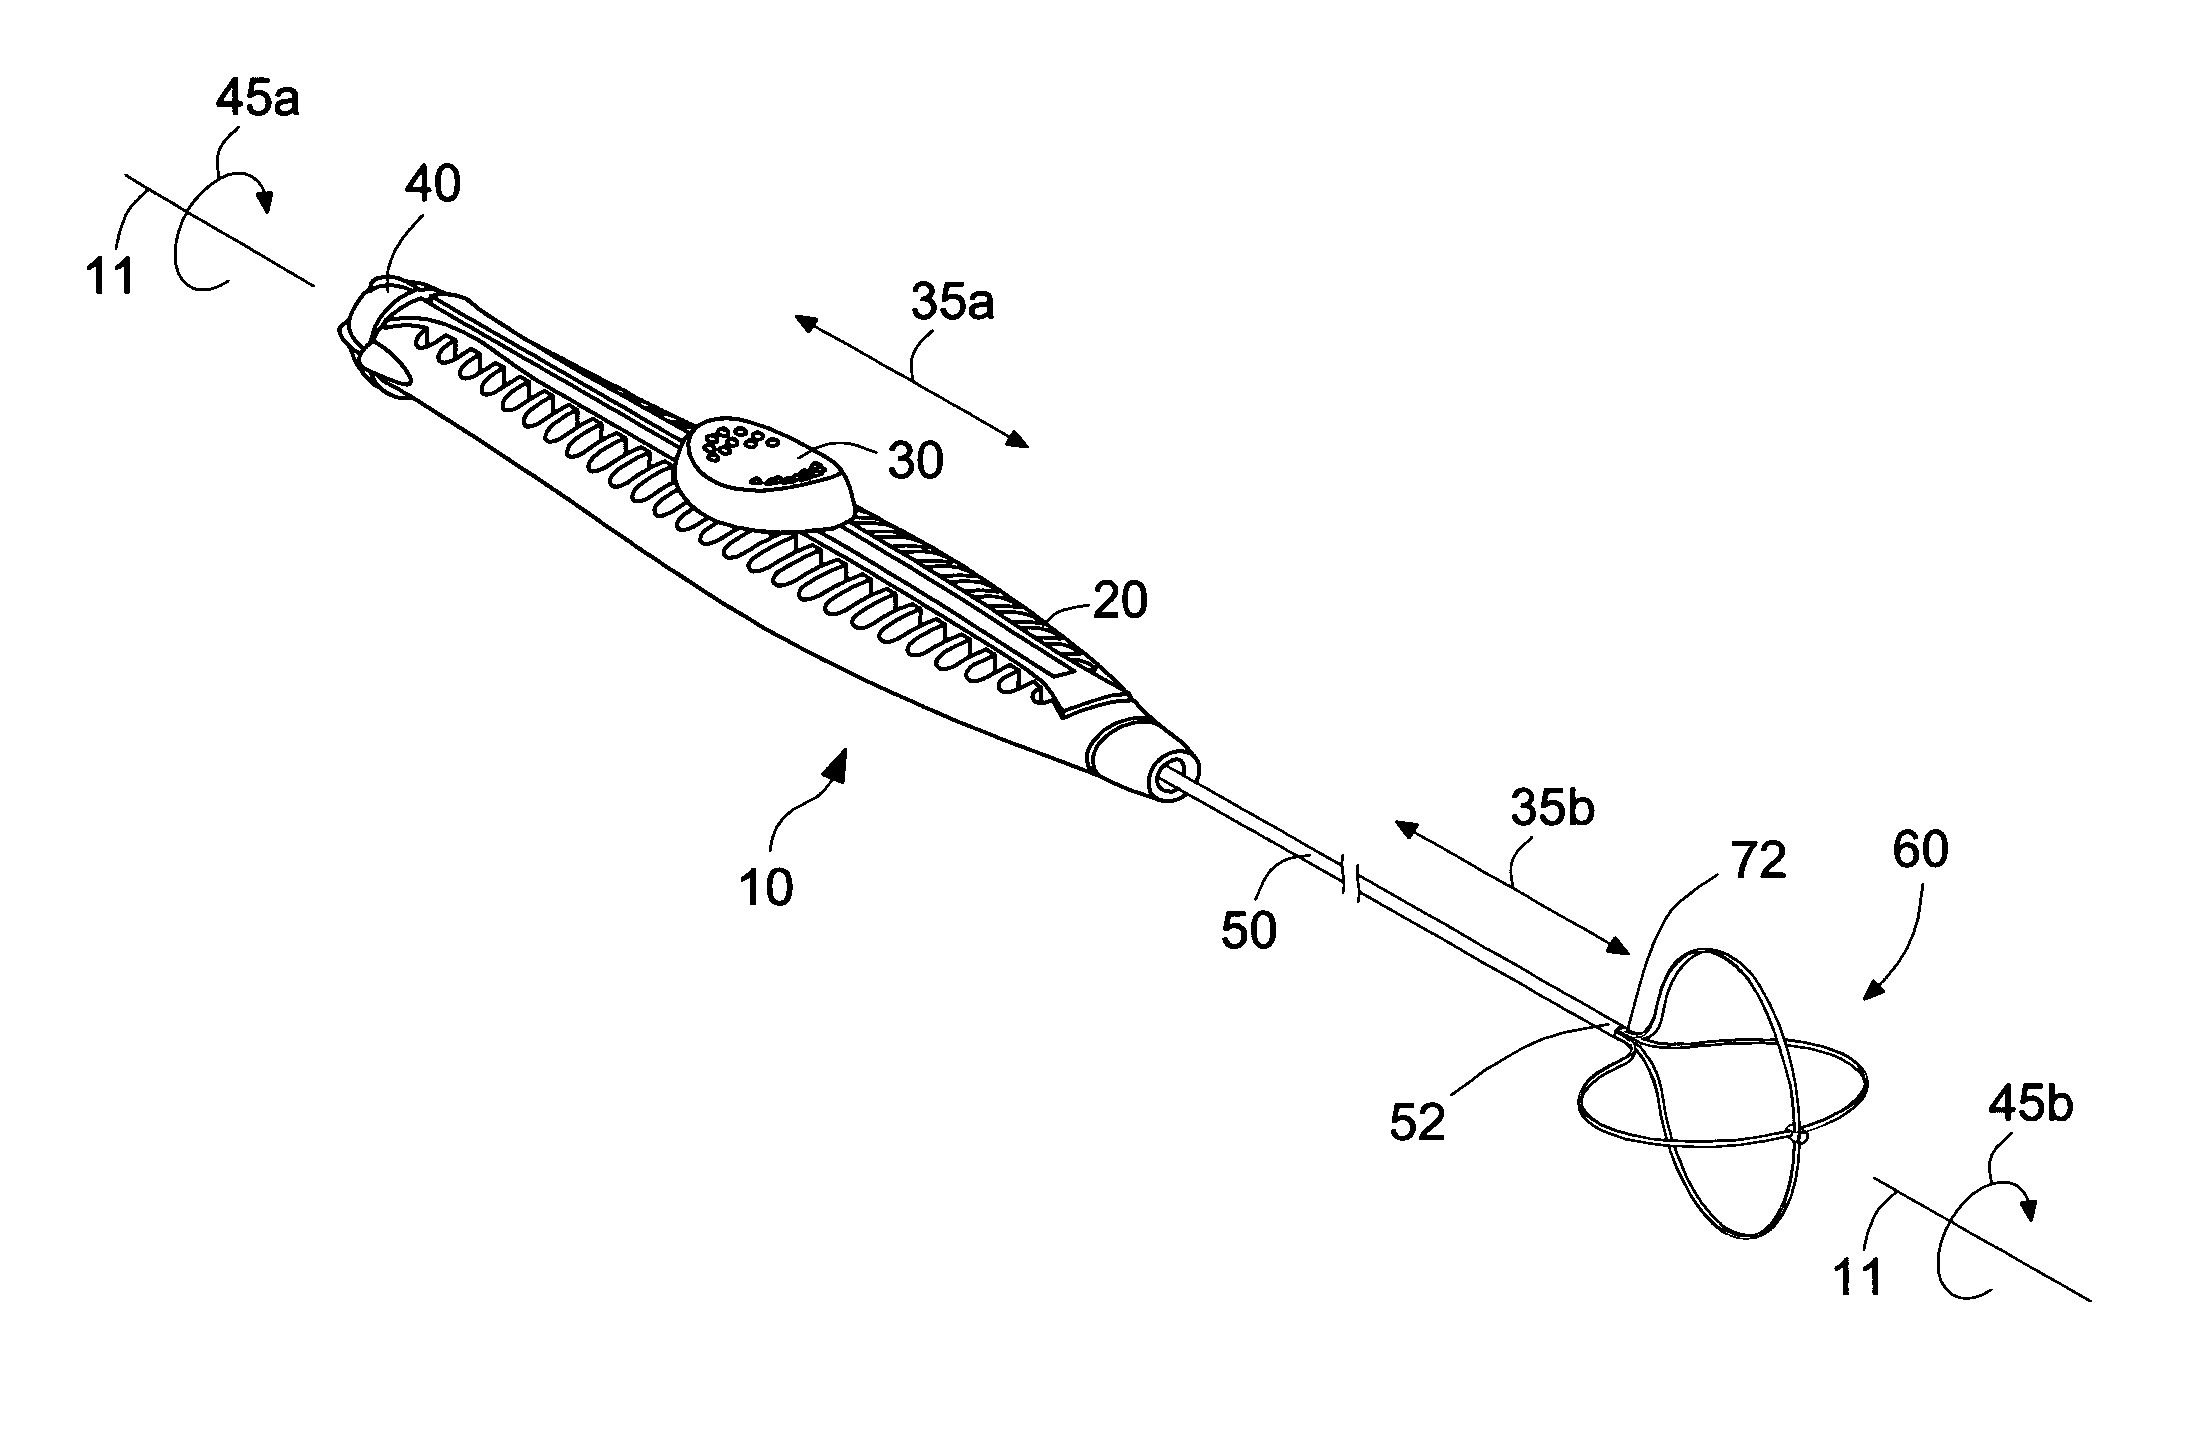 Stone retriever for flexible endoscopes having small diameter working channels